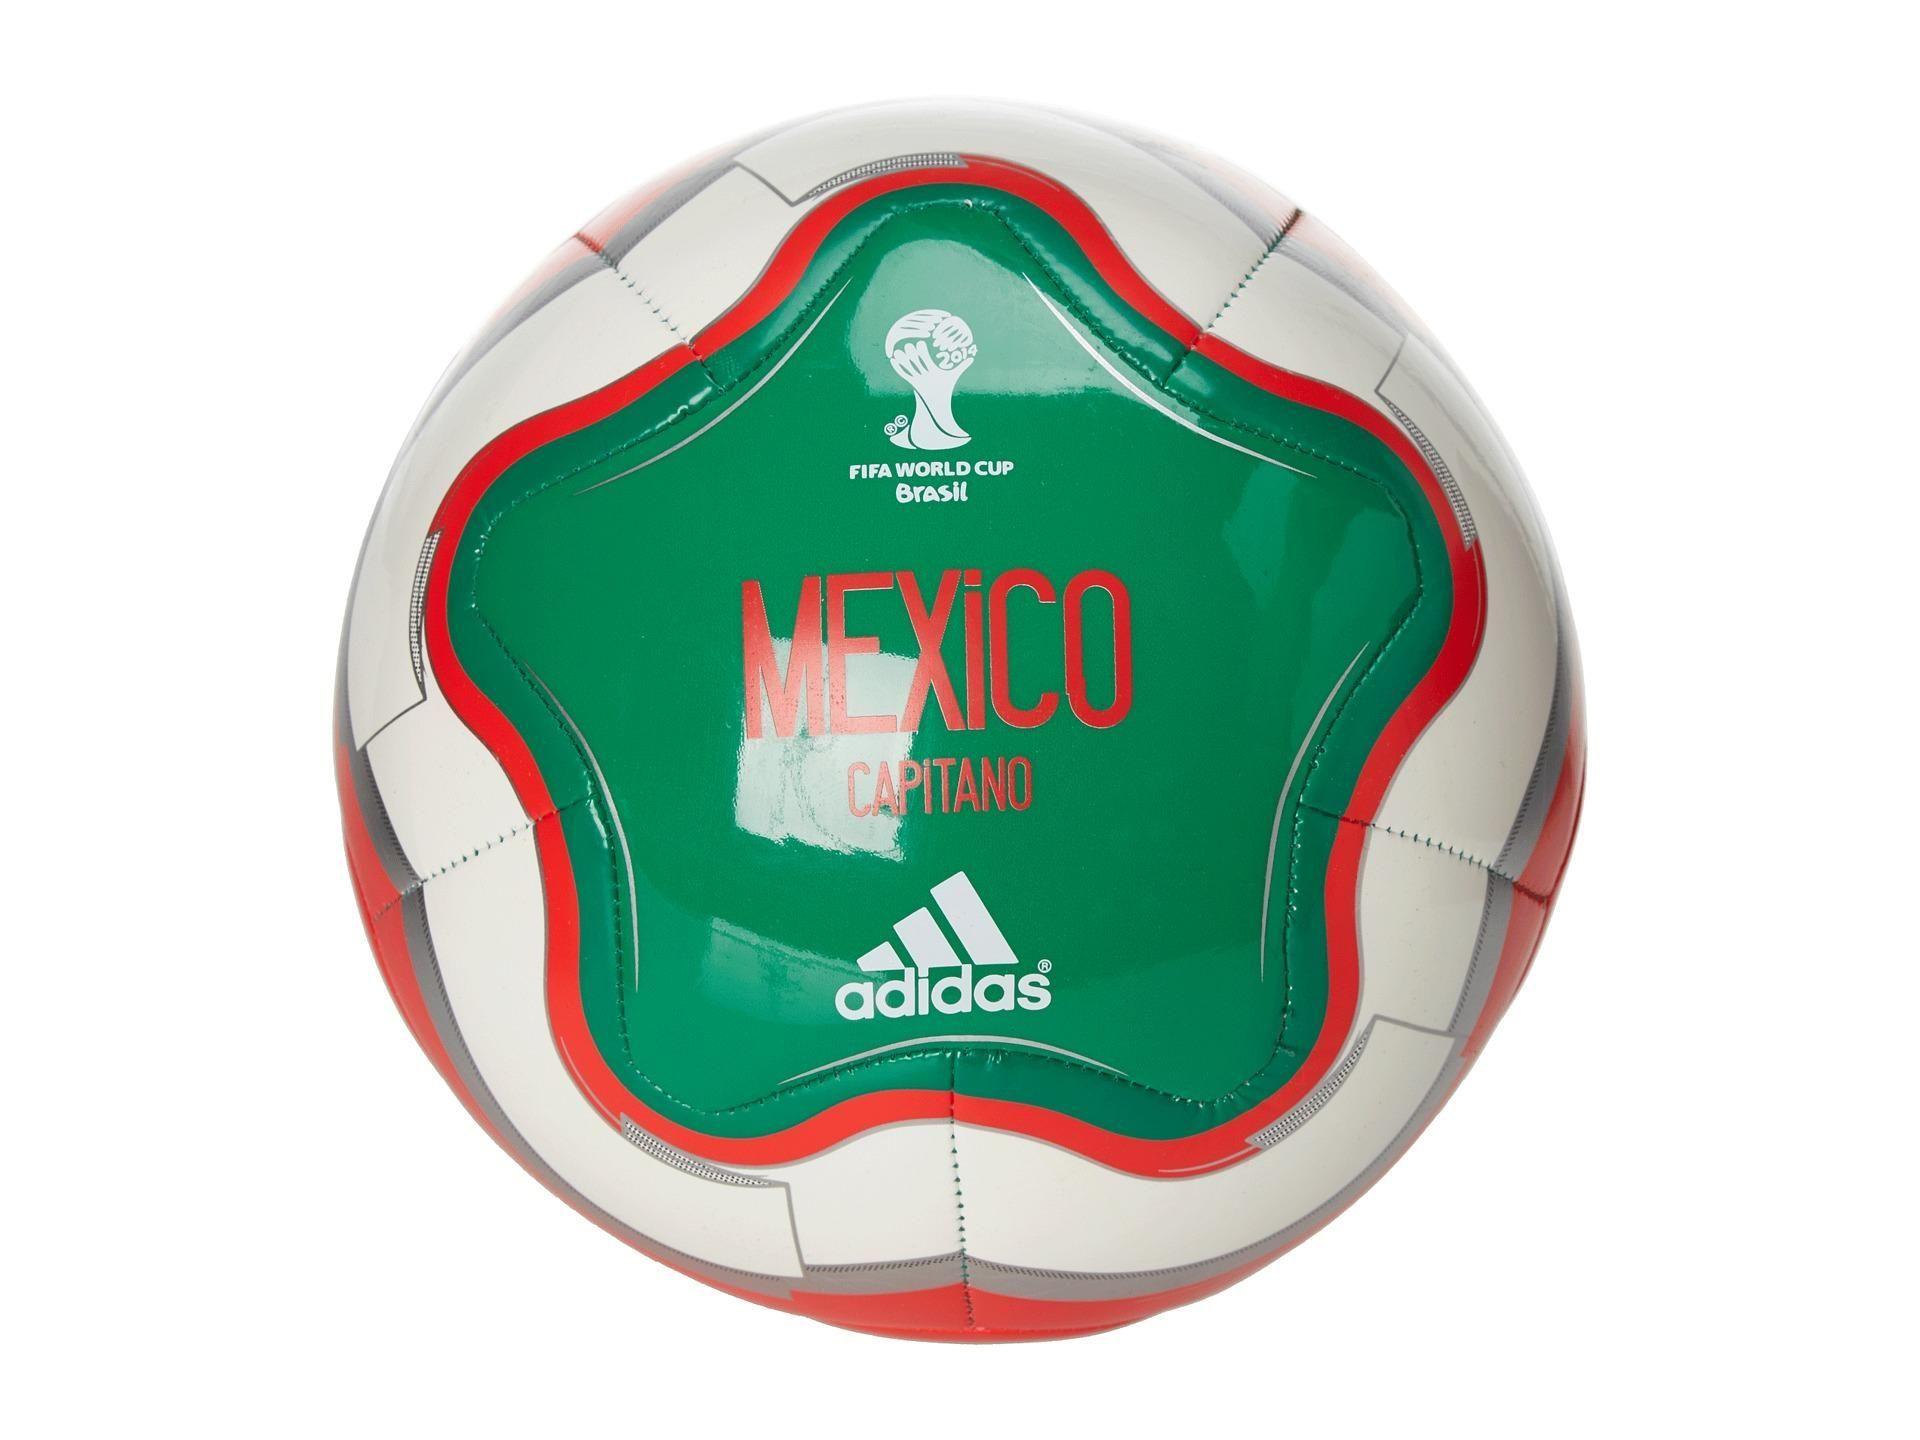 Mexico 2015 Copa America Adidas Kits Wallpaper Wide Or HD Sports